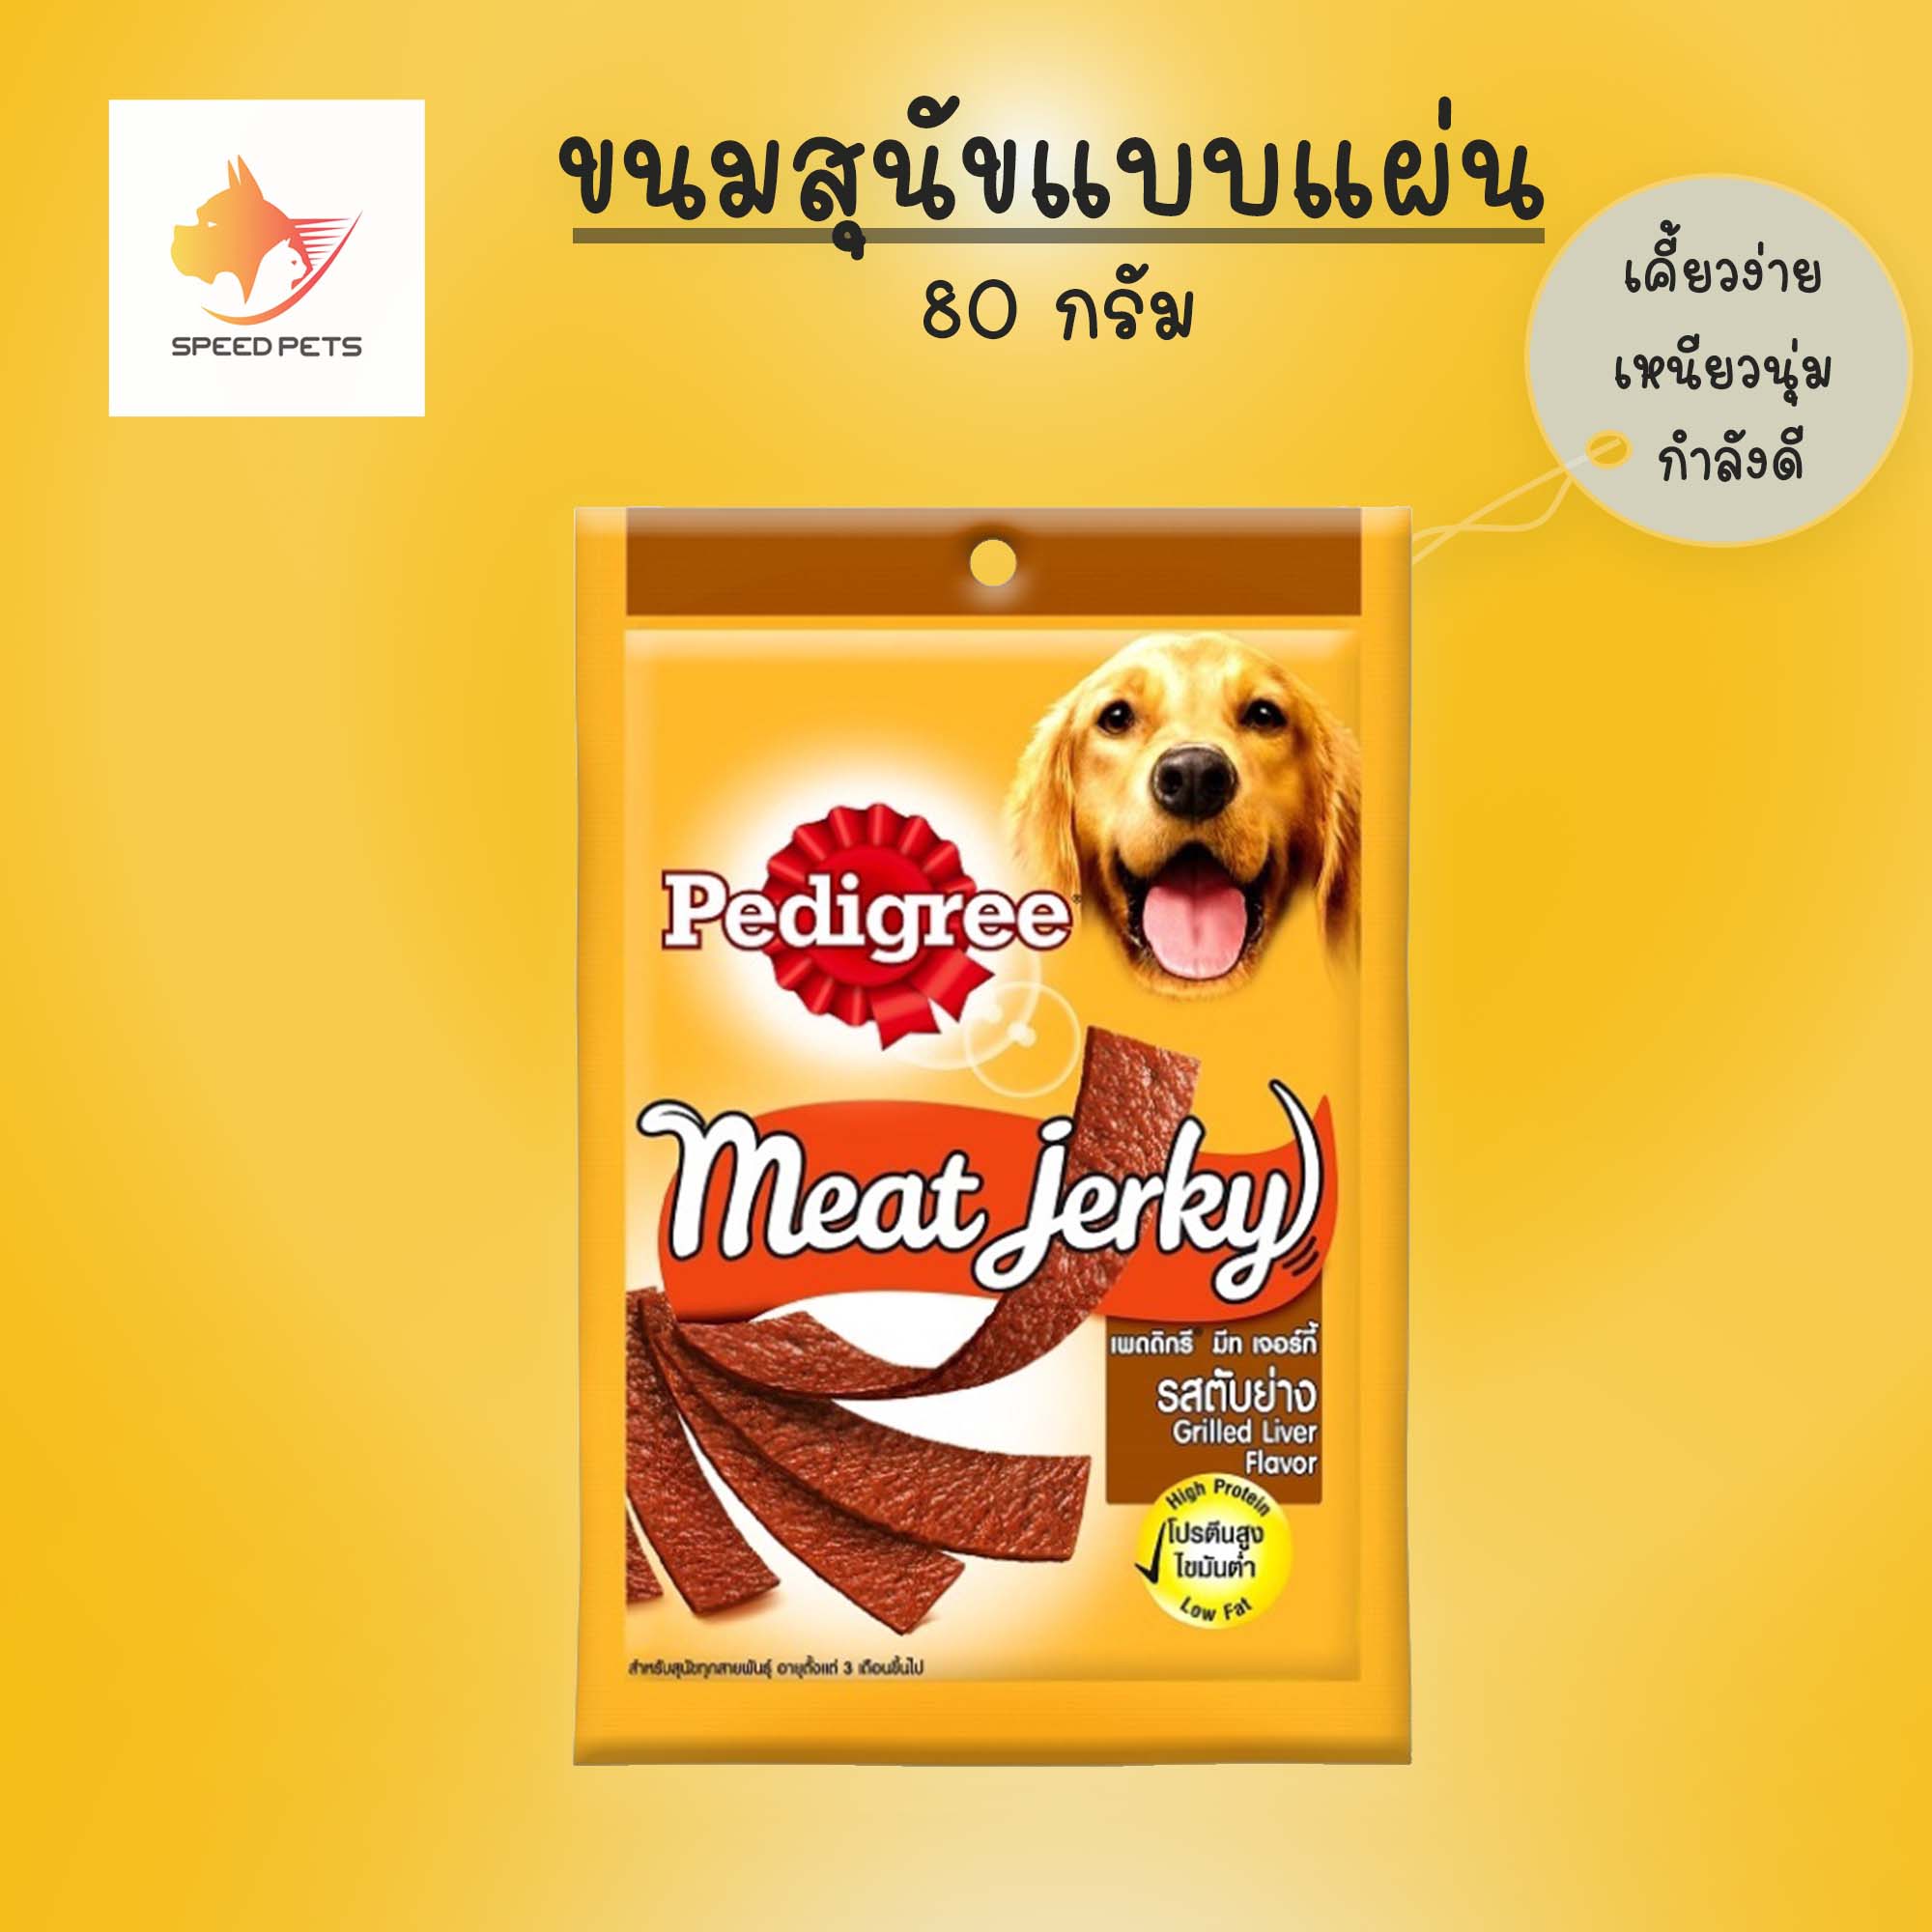 PEDIGREE Meat Jerky Liver Flavour เพดดิกรี ขนมสุนัข มีทเจอร์กี้ รสตับย่าง 80กรัม จำนวน 1 ถุง